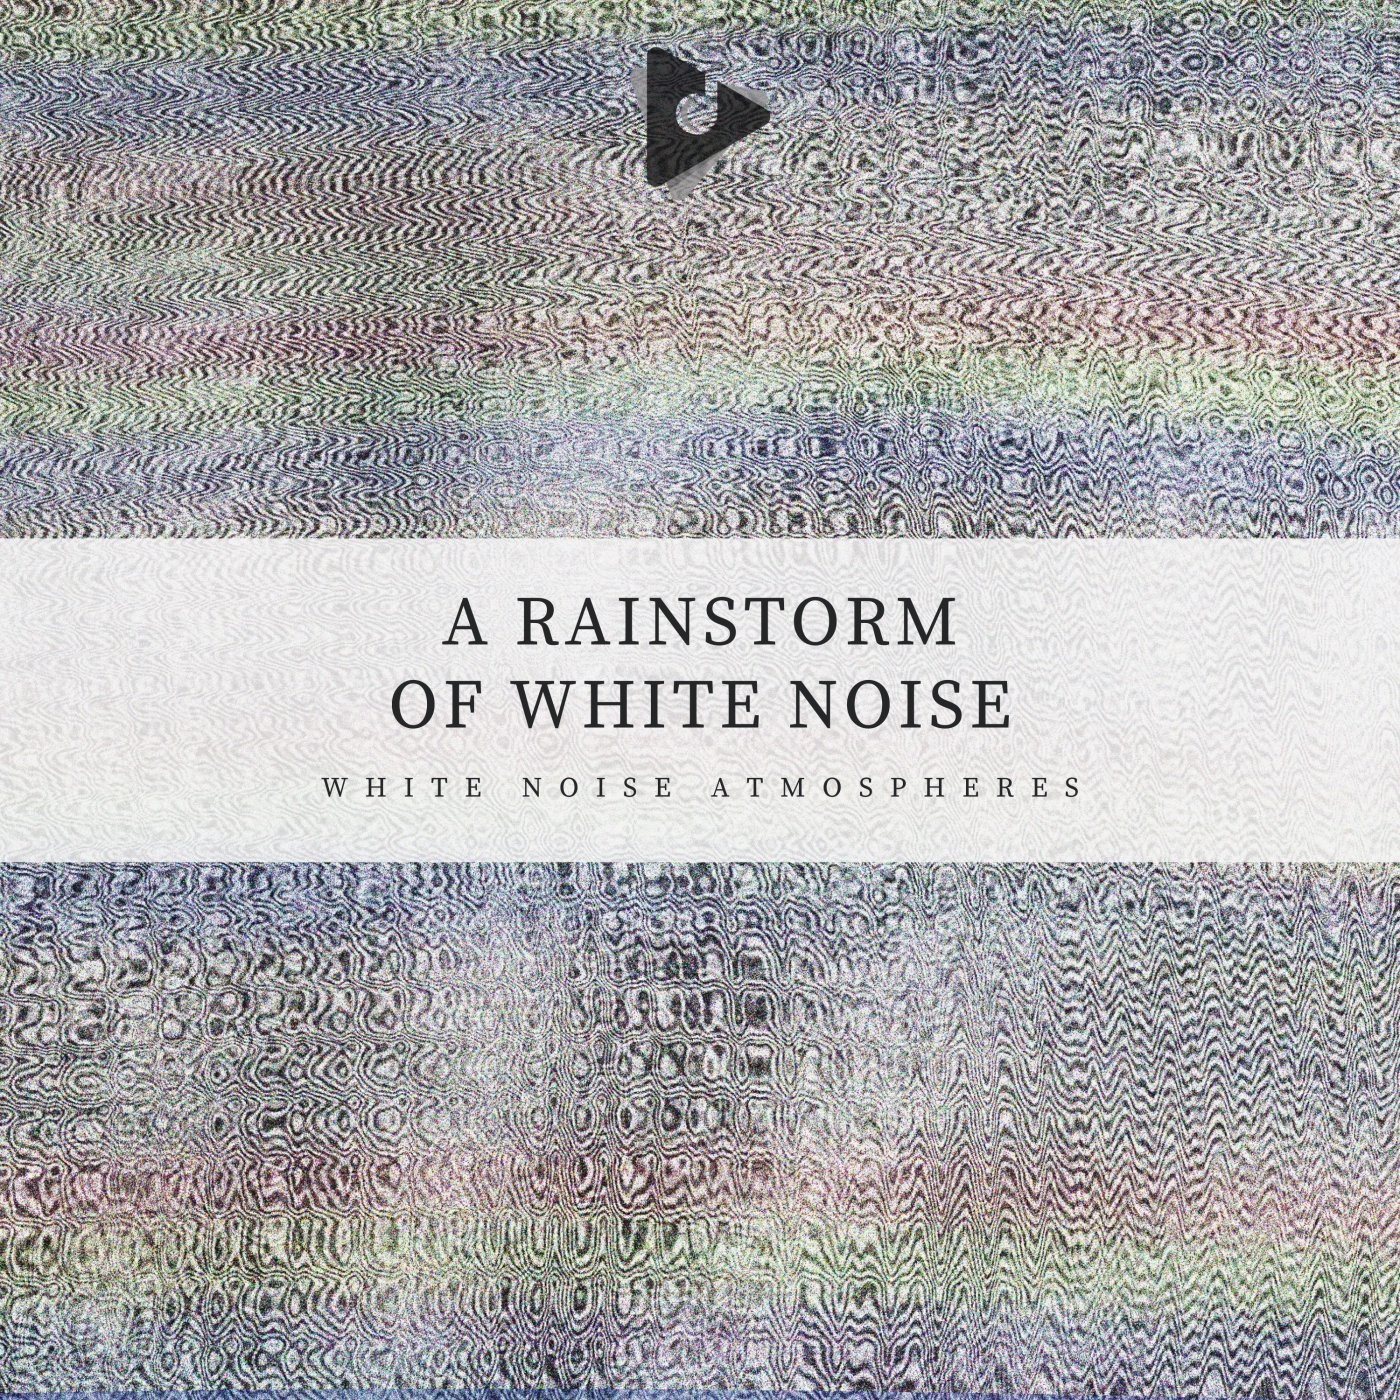 A Rainstorm of White Noise